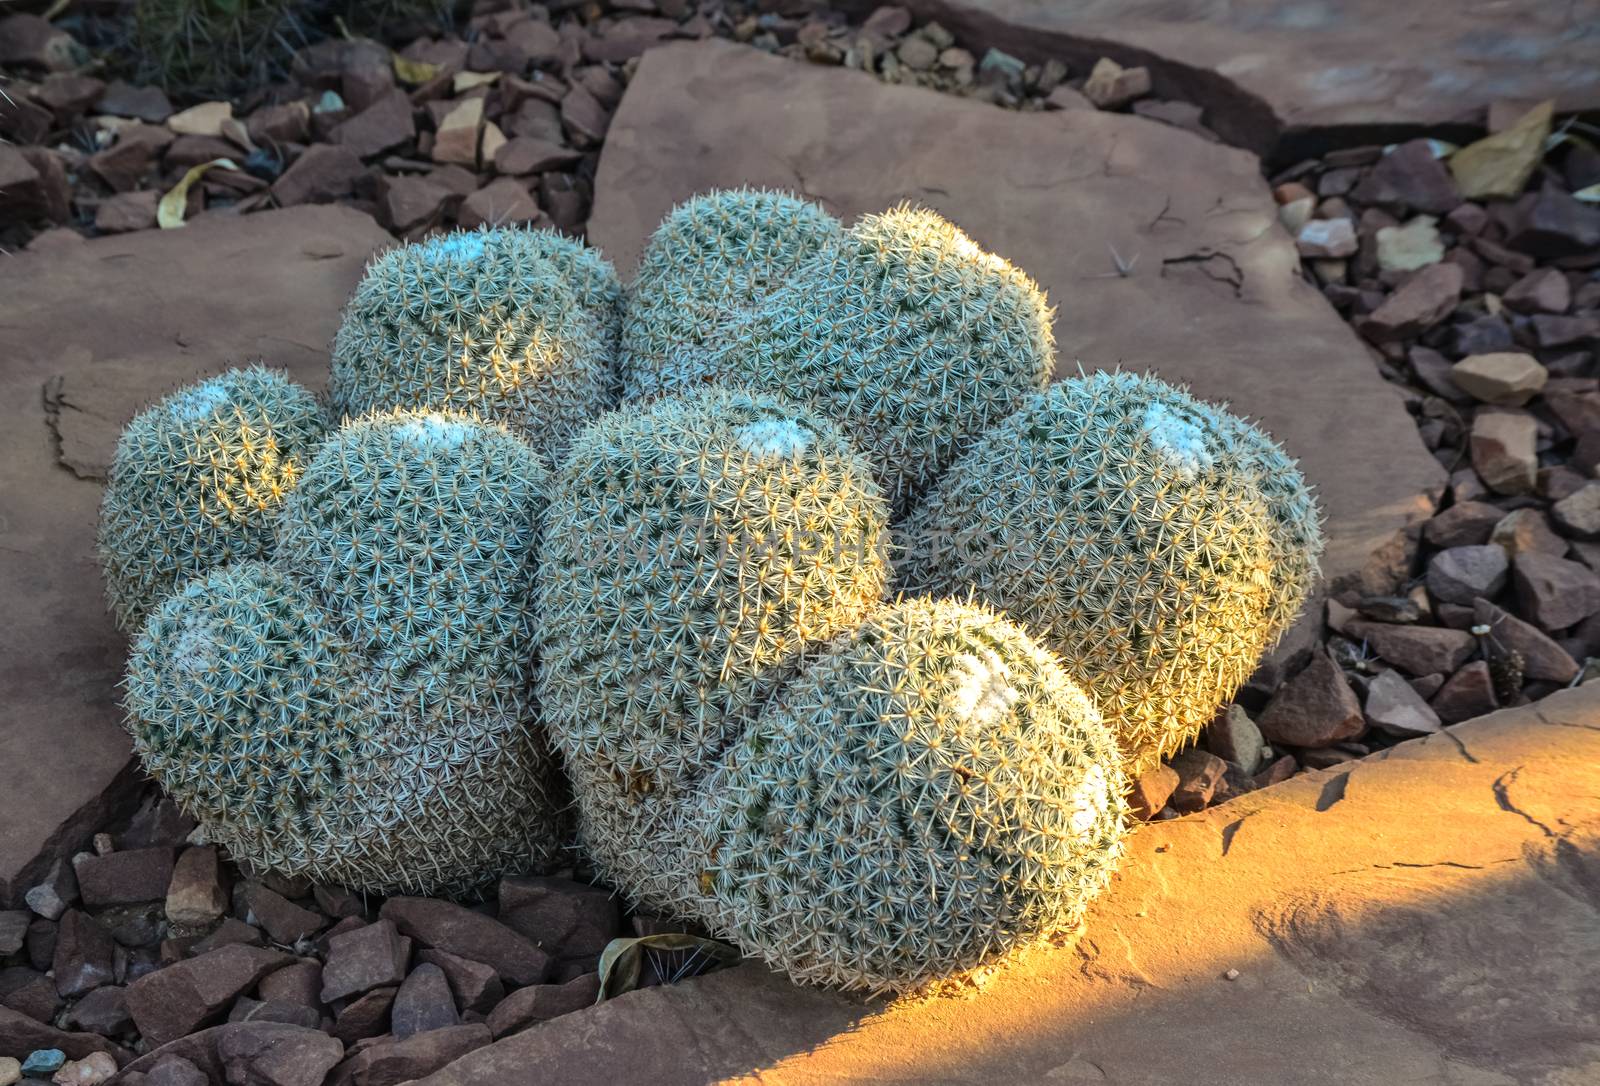 Cactus Mamillaria in the Phoenix Botanical Garden, Arizona, USA by Hydrobiolog